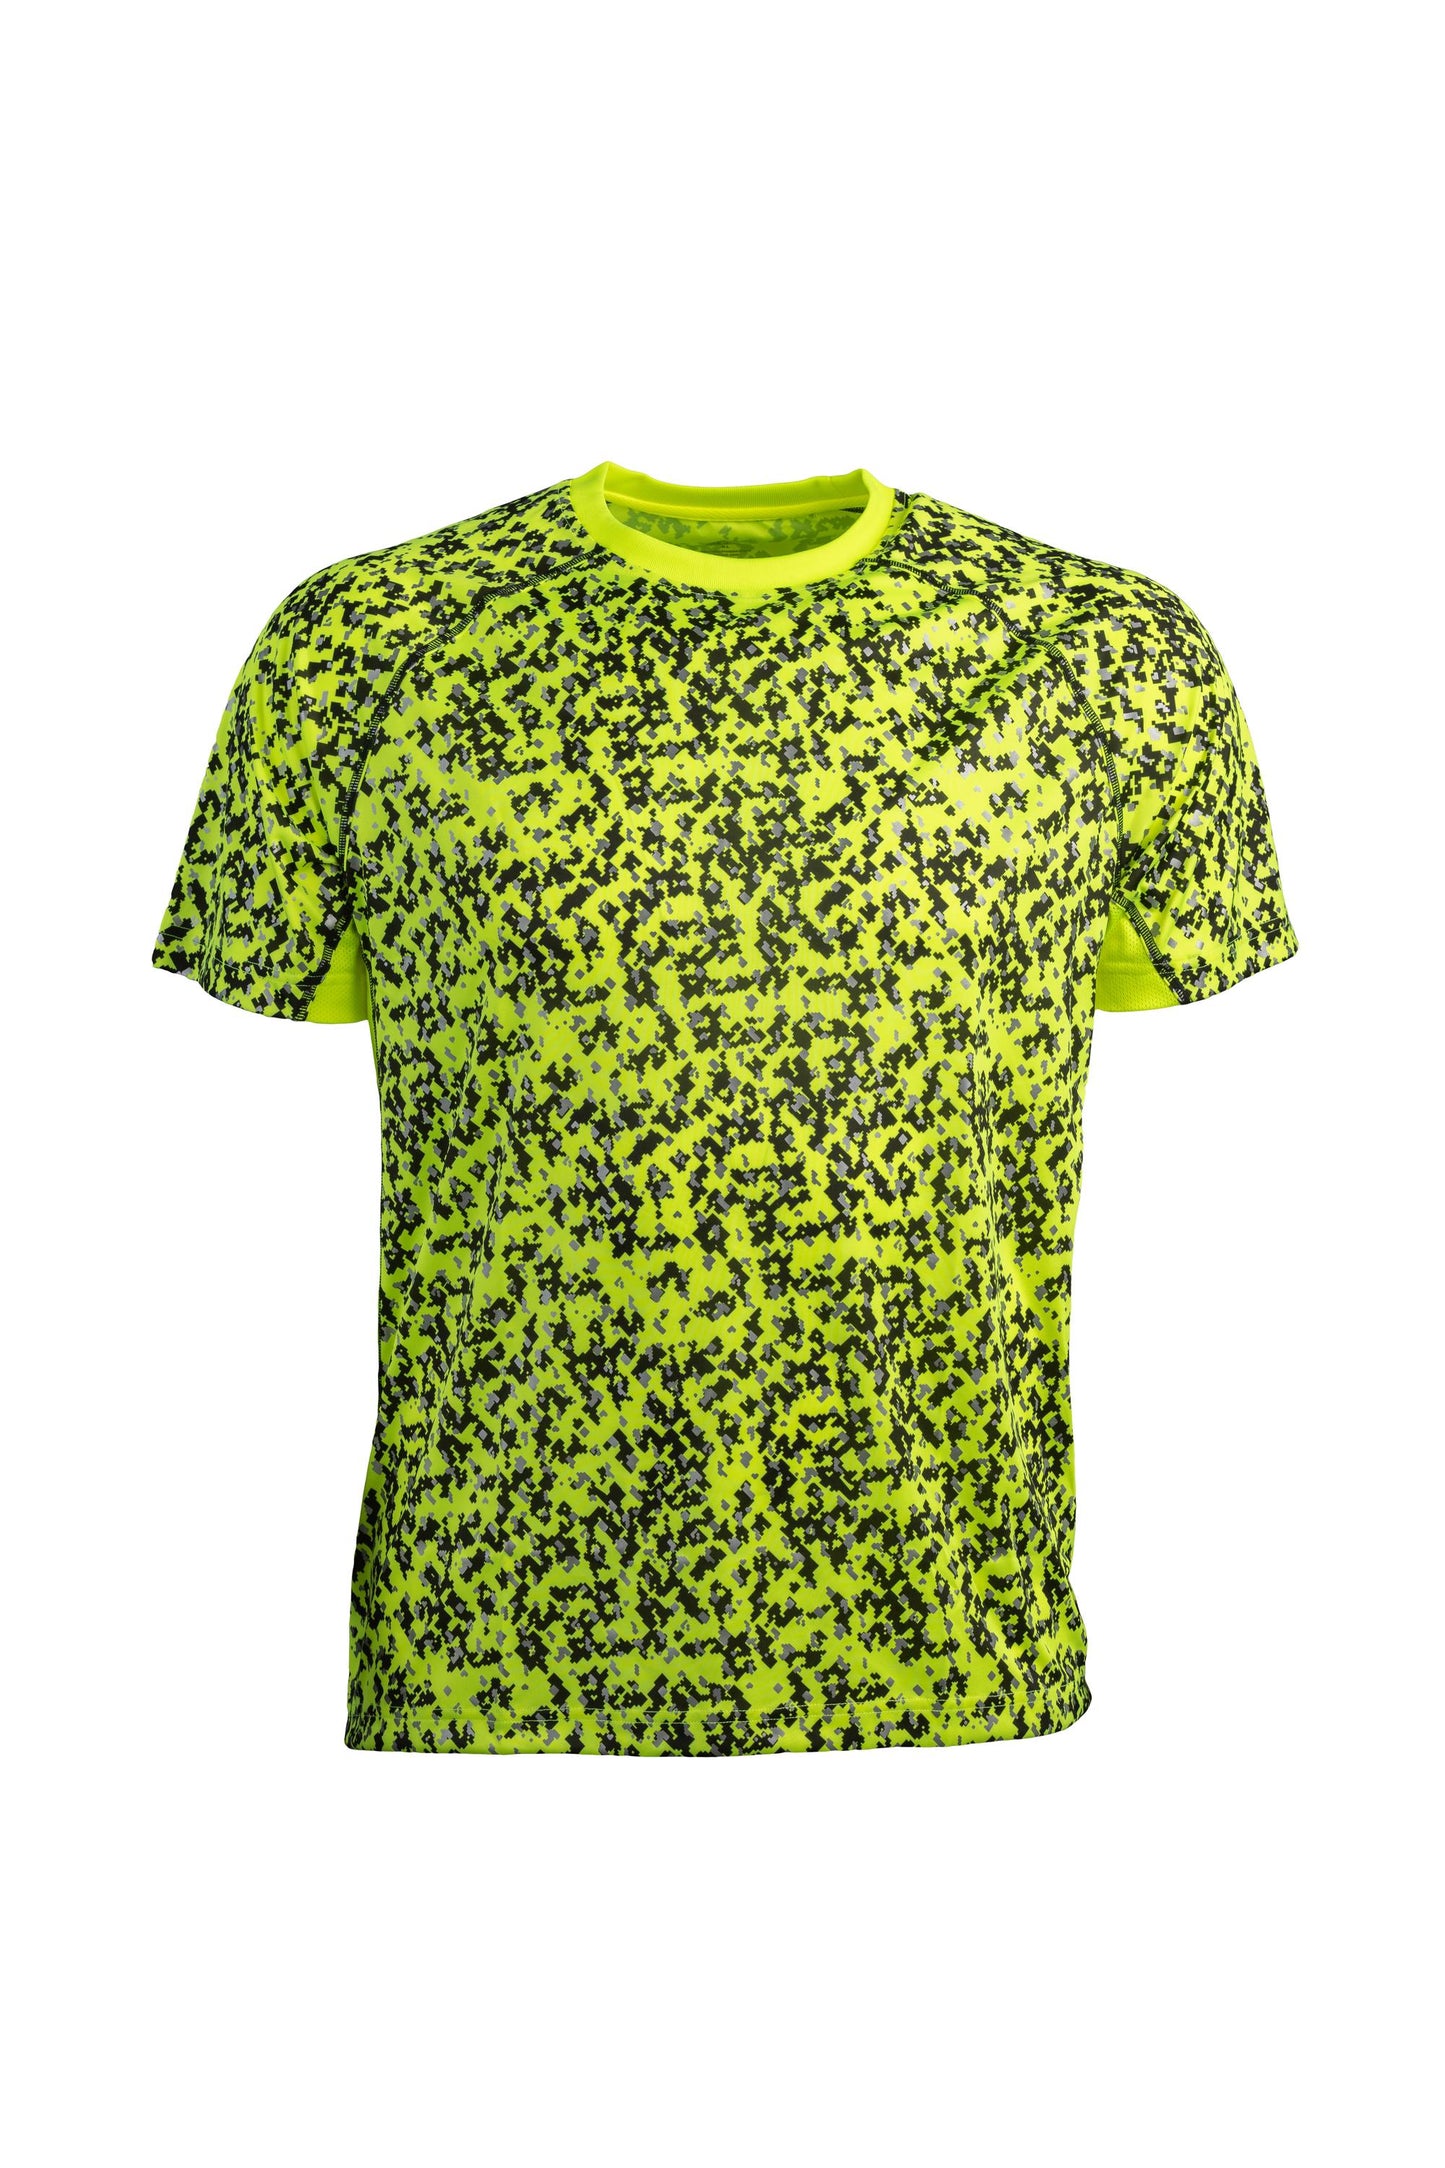 Men’s Lime-Black Camo Short Sleeve WildSpark™ Athletic Shirt